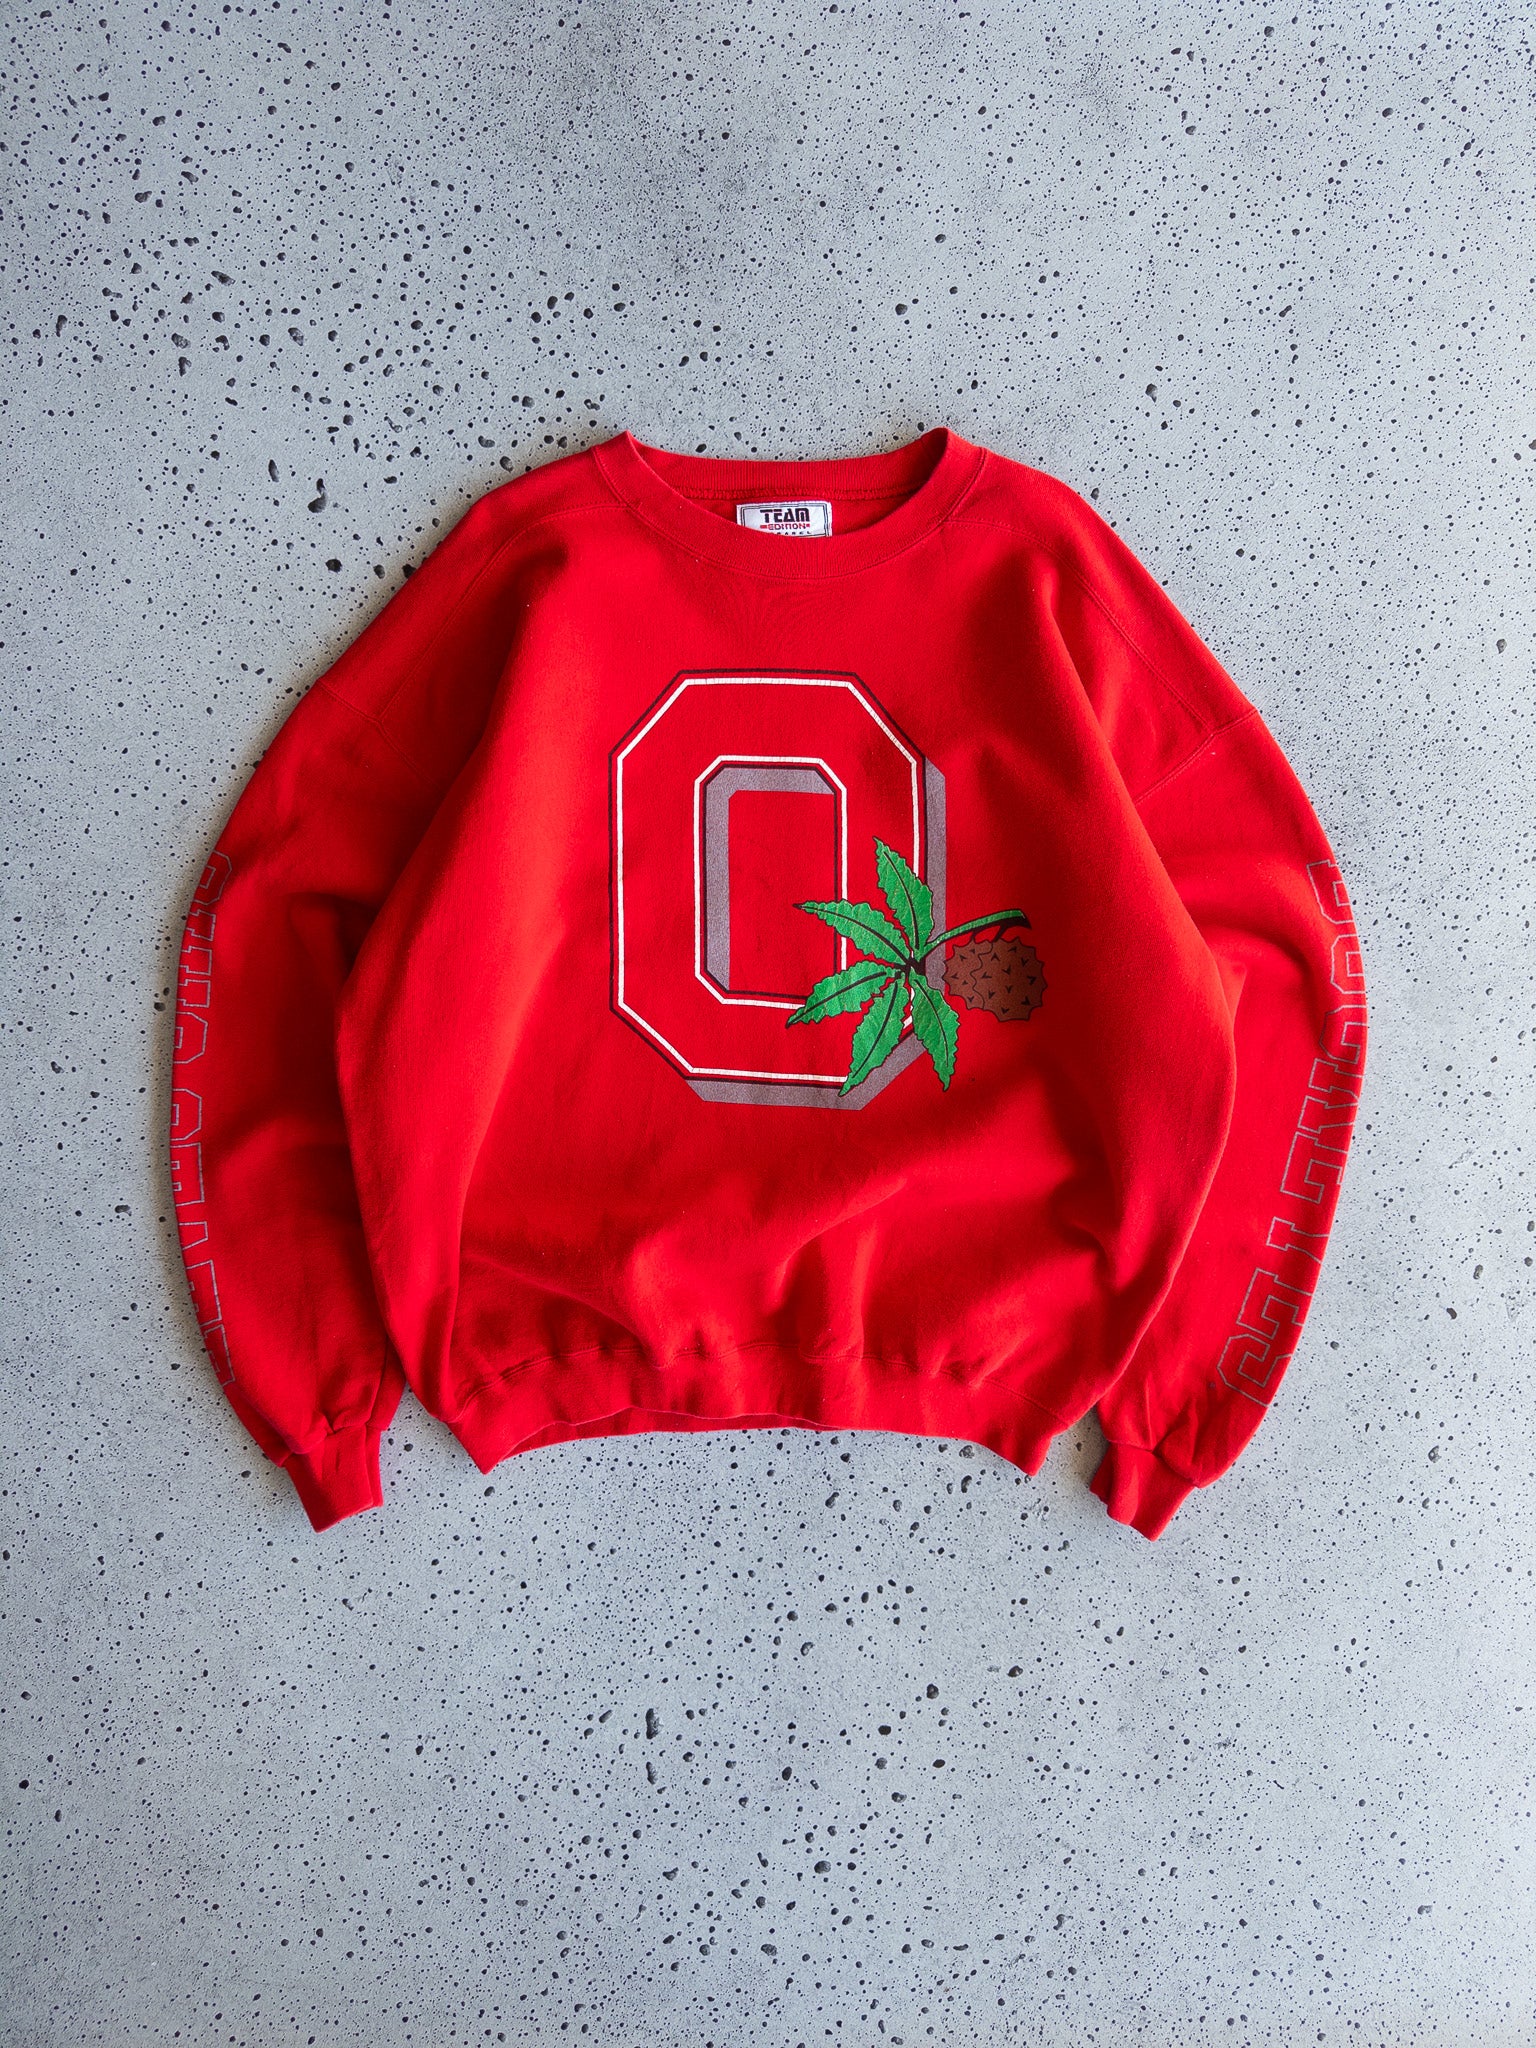 Vintage Ohio State Buckeyes Sweatshirt (XL)